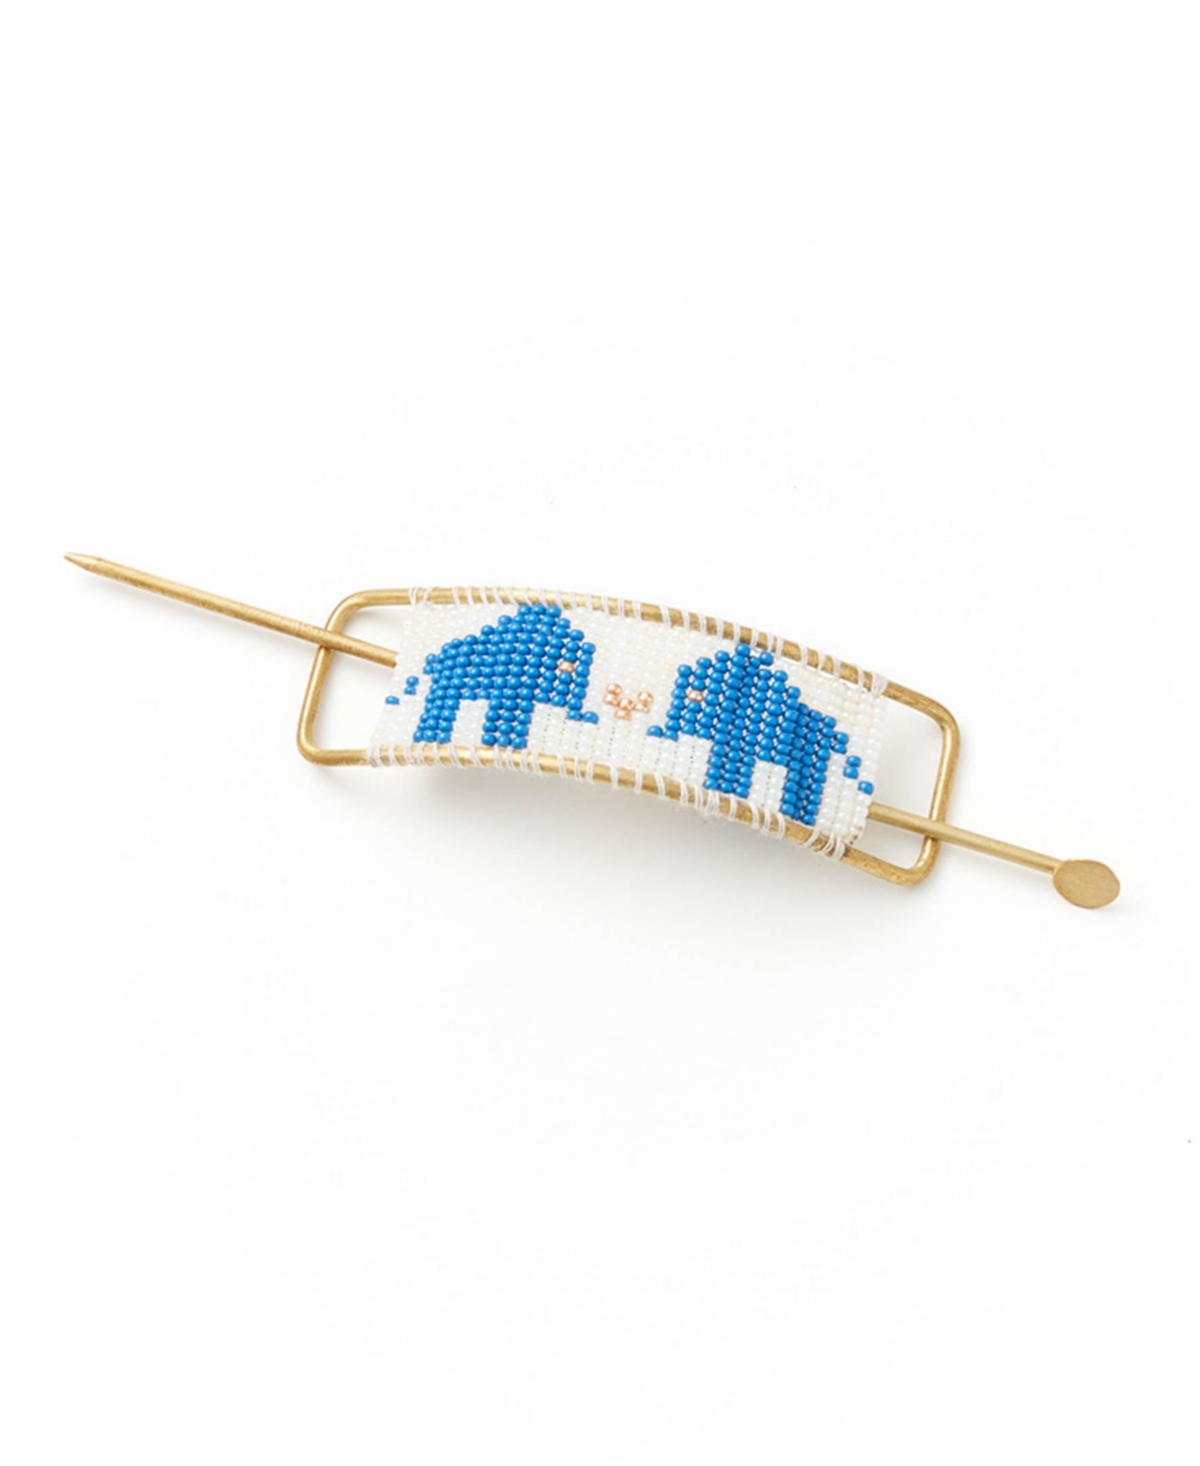 Elephant Barrette Pin - Multi